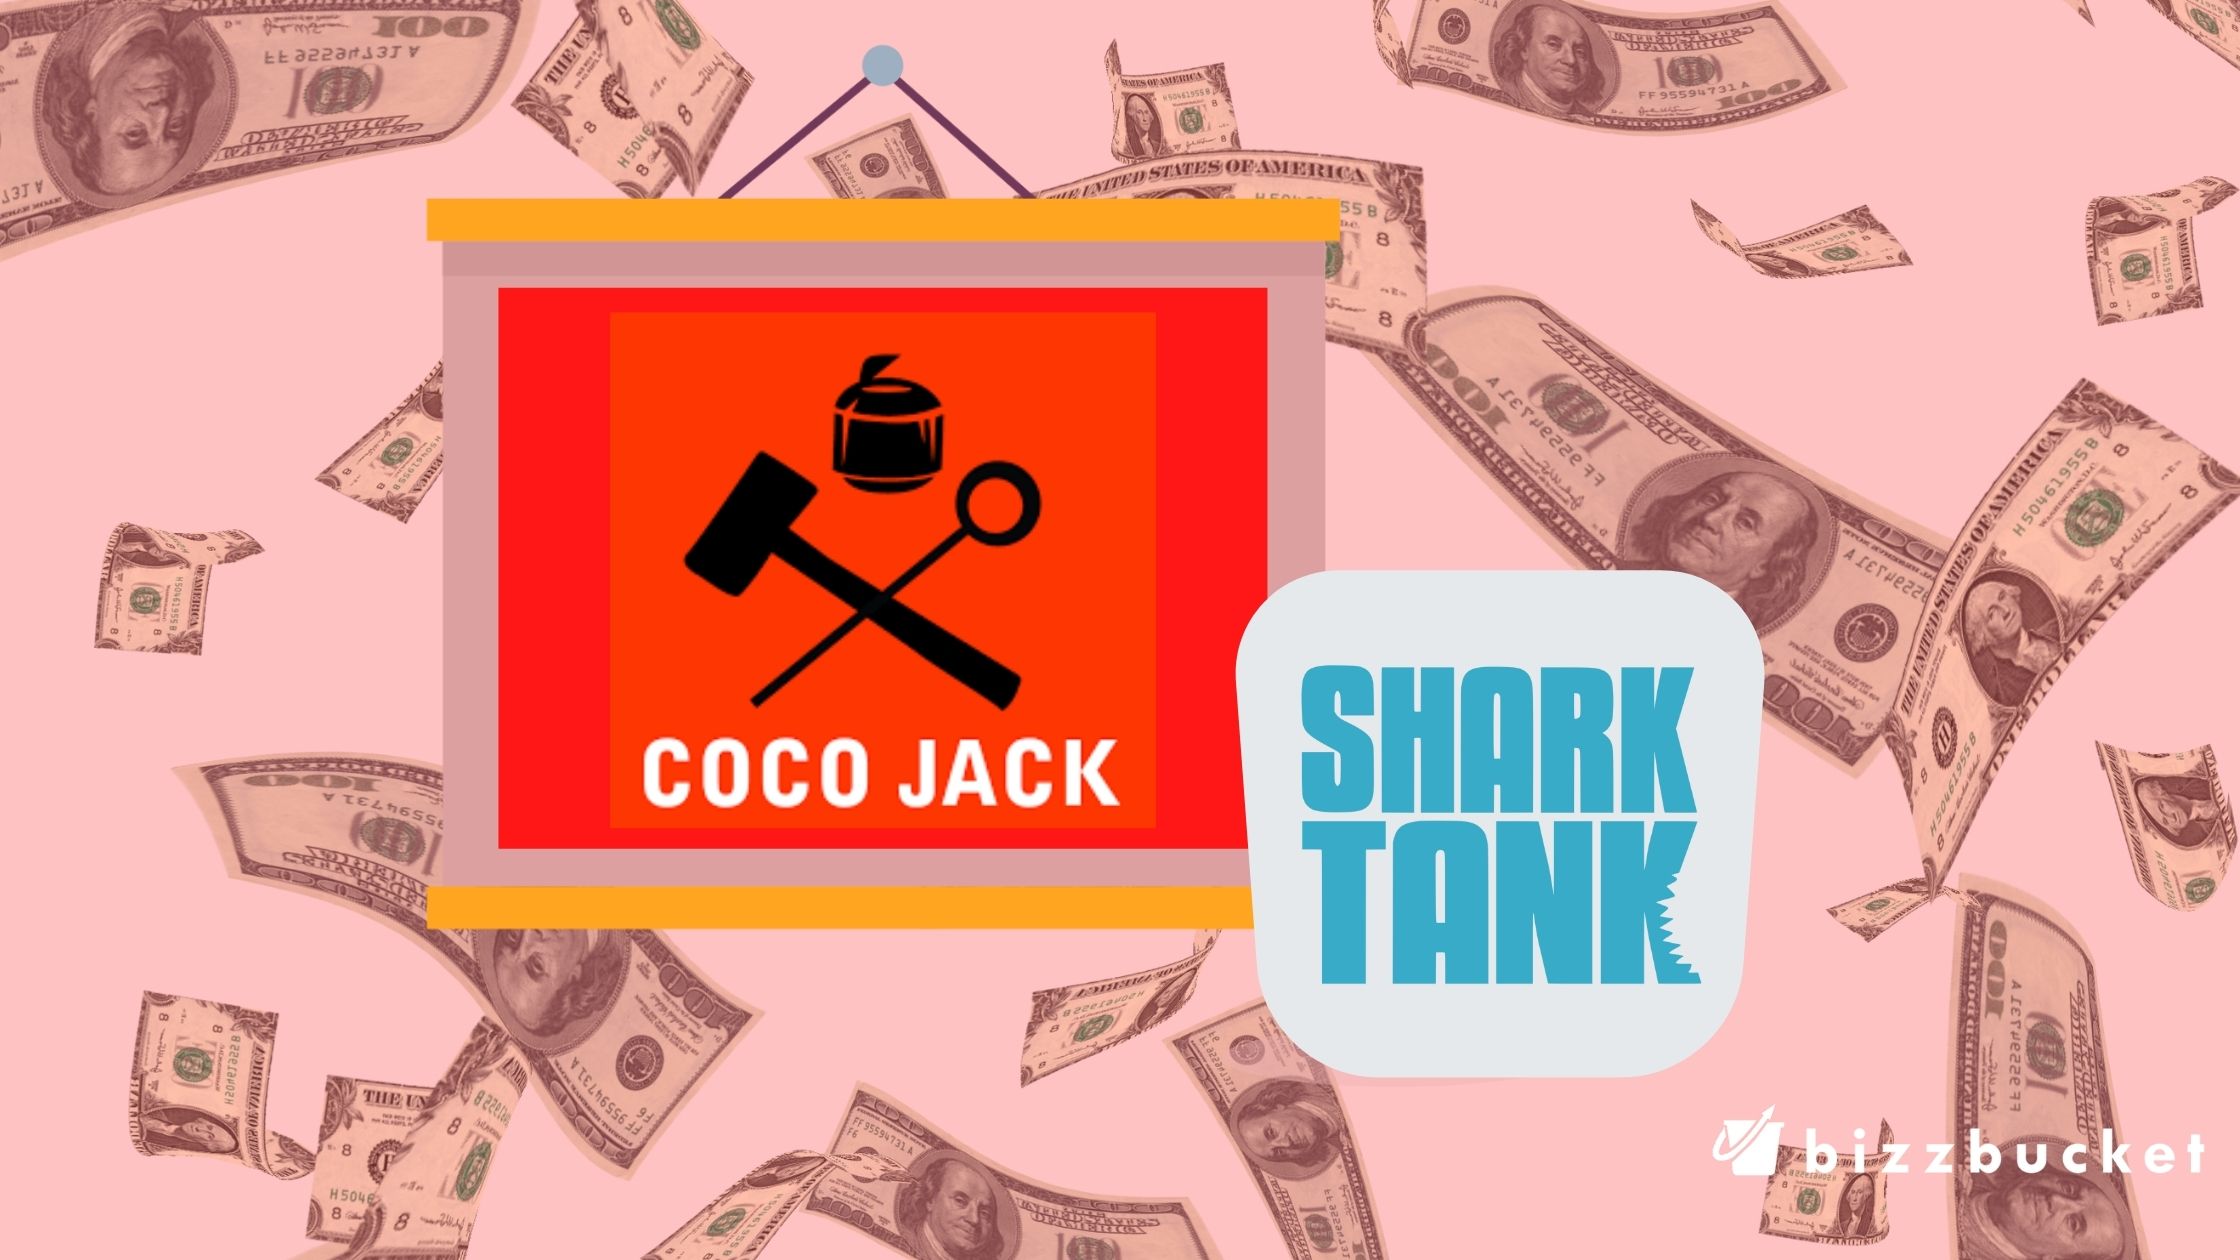 Coco Jack shark tank update